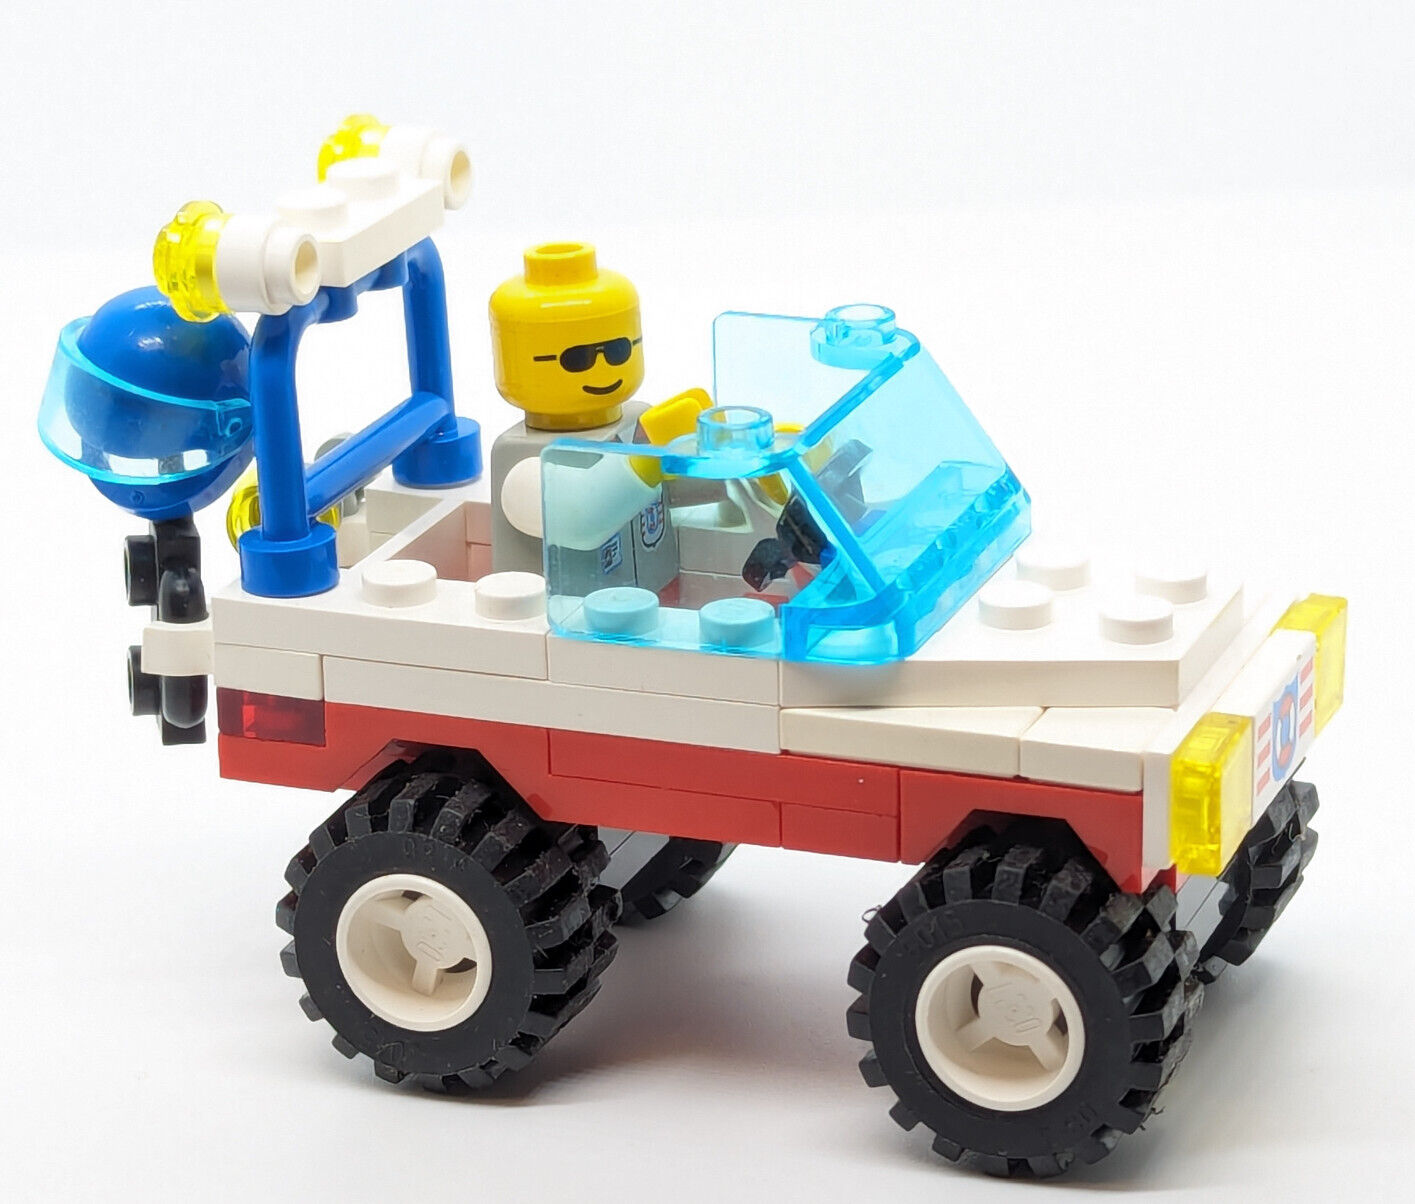 Lego Classic Coast Guard Town Minifigure & Truck from Set Hurricane Harbor 6338